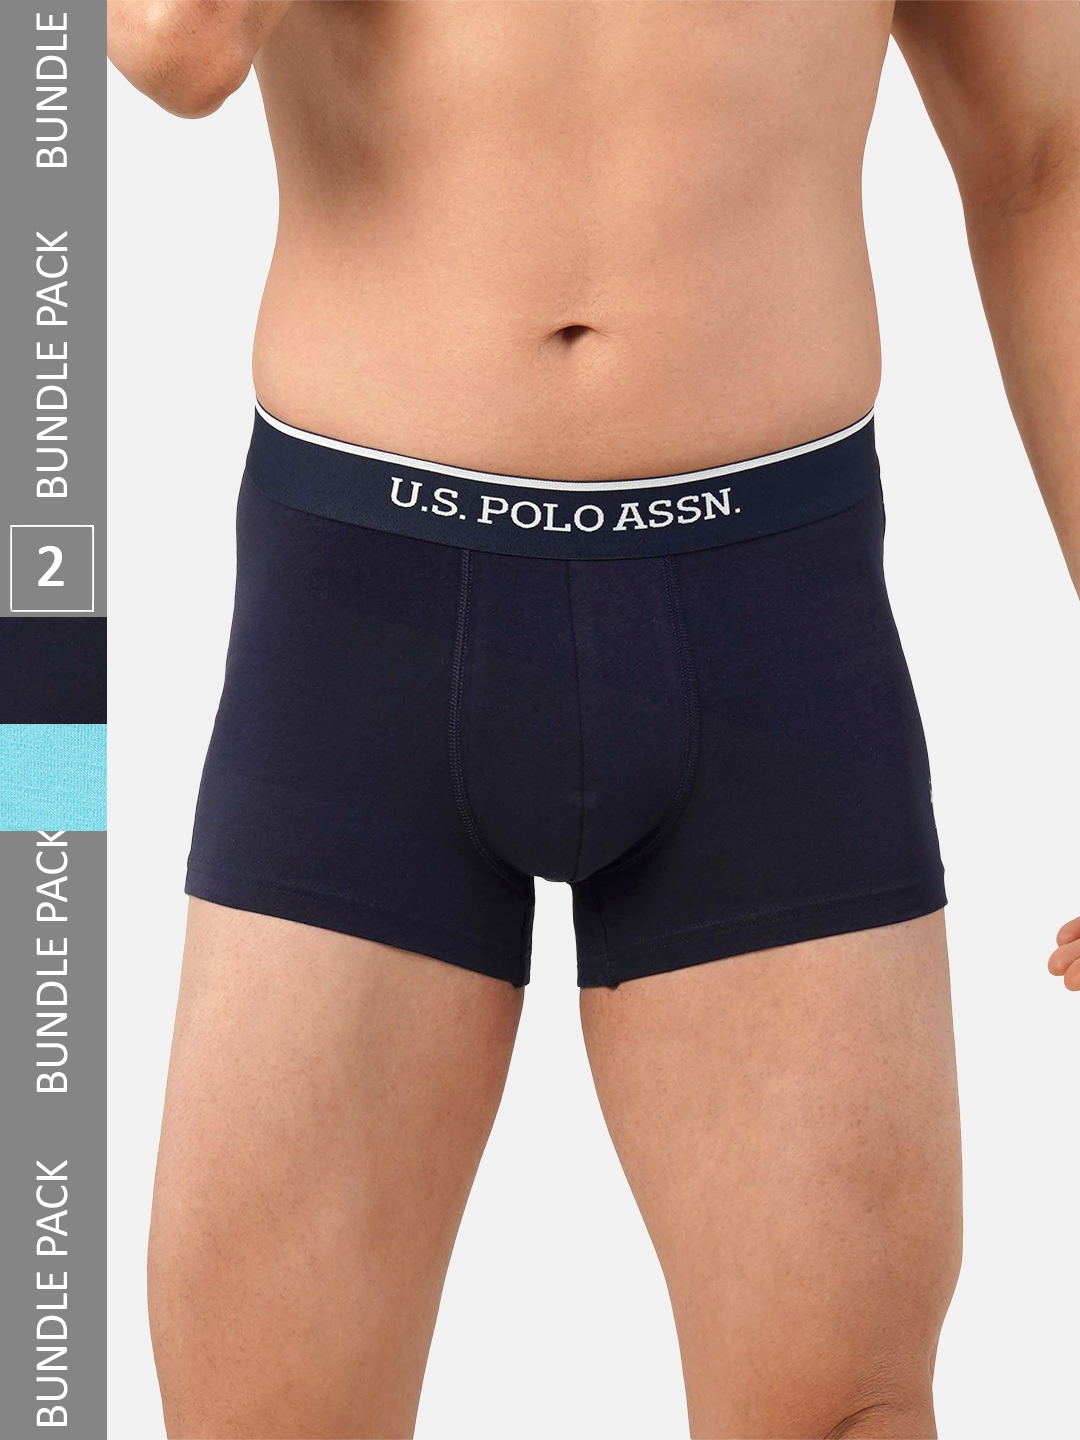 U.S. Polo Assn. Men’s Underwear – Cotton Stretch Boxer Briefs (4 Pack) :  : Clothing, Shoes & Accessories